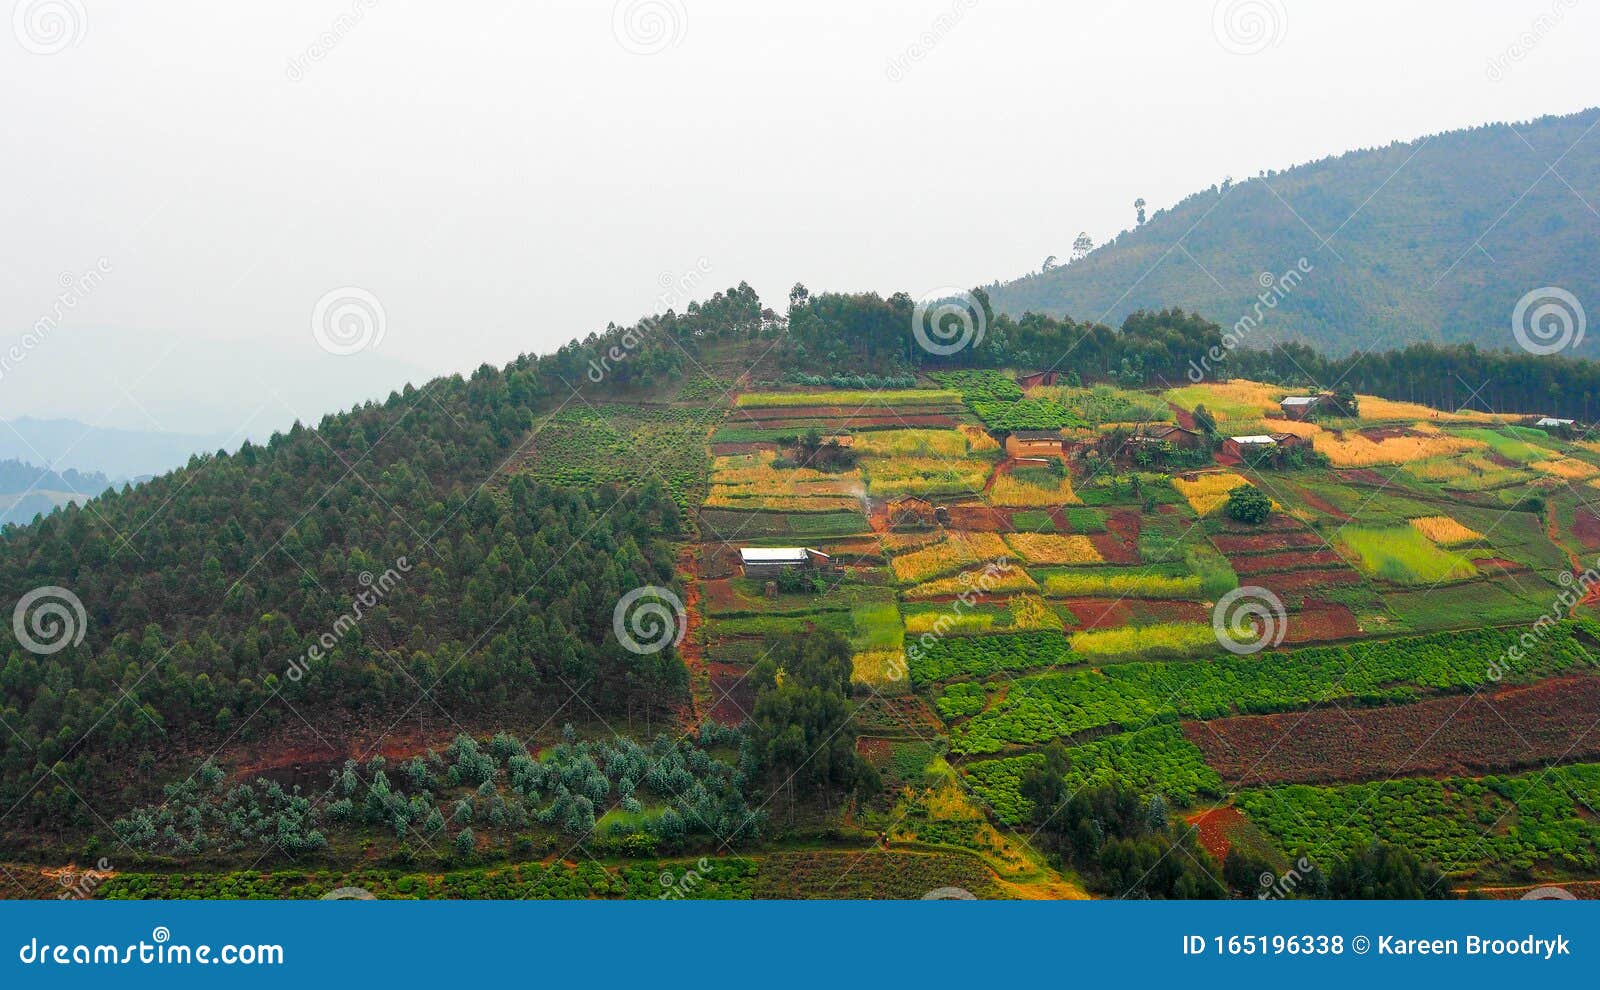 patchwork landscape of small farming fields on a hill in rwanda